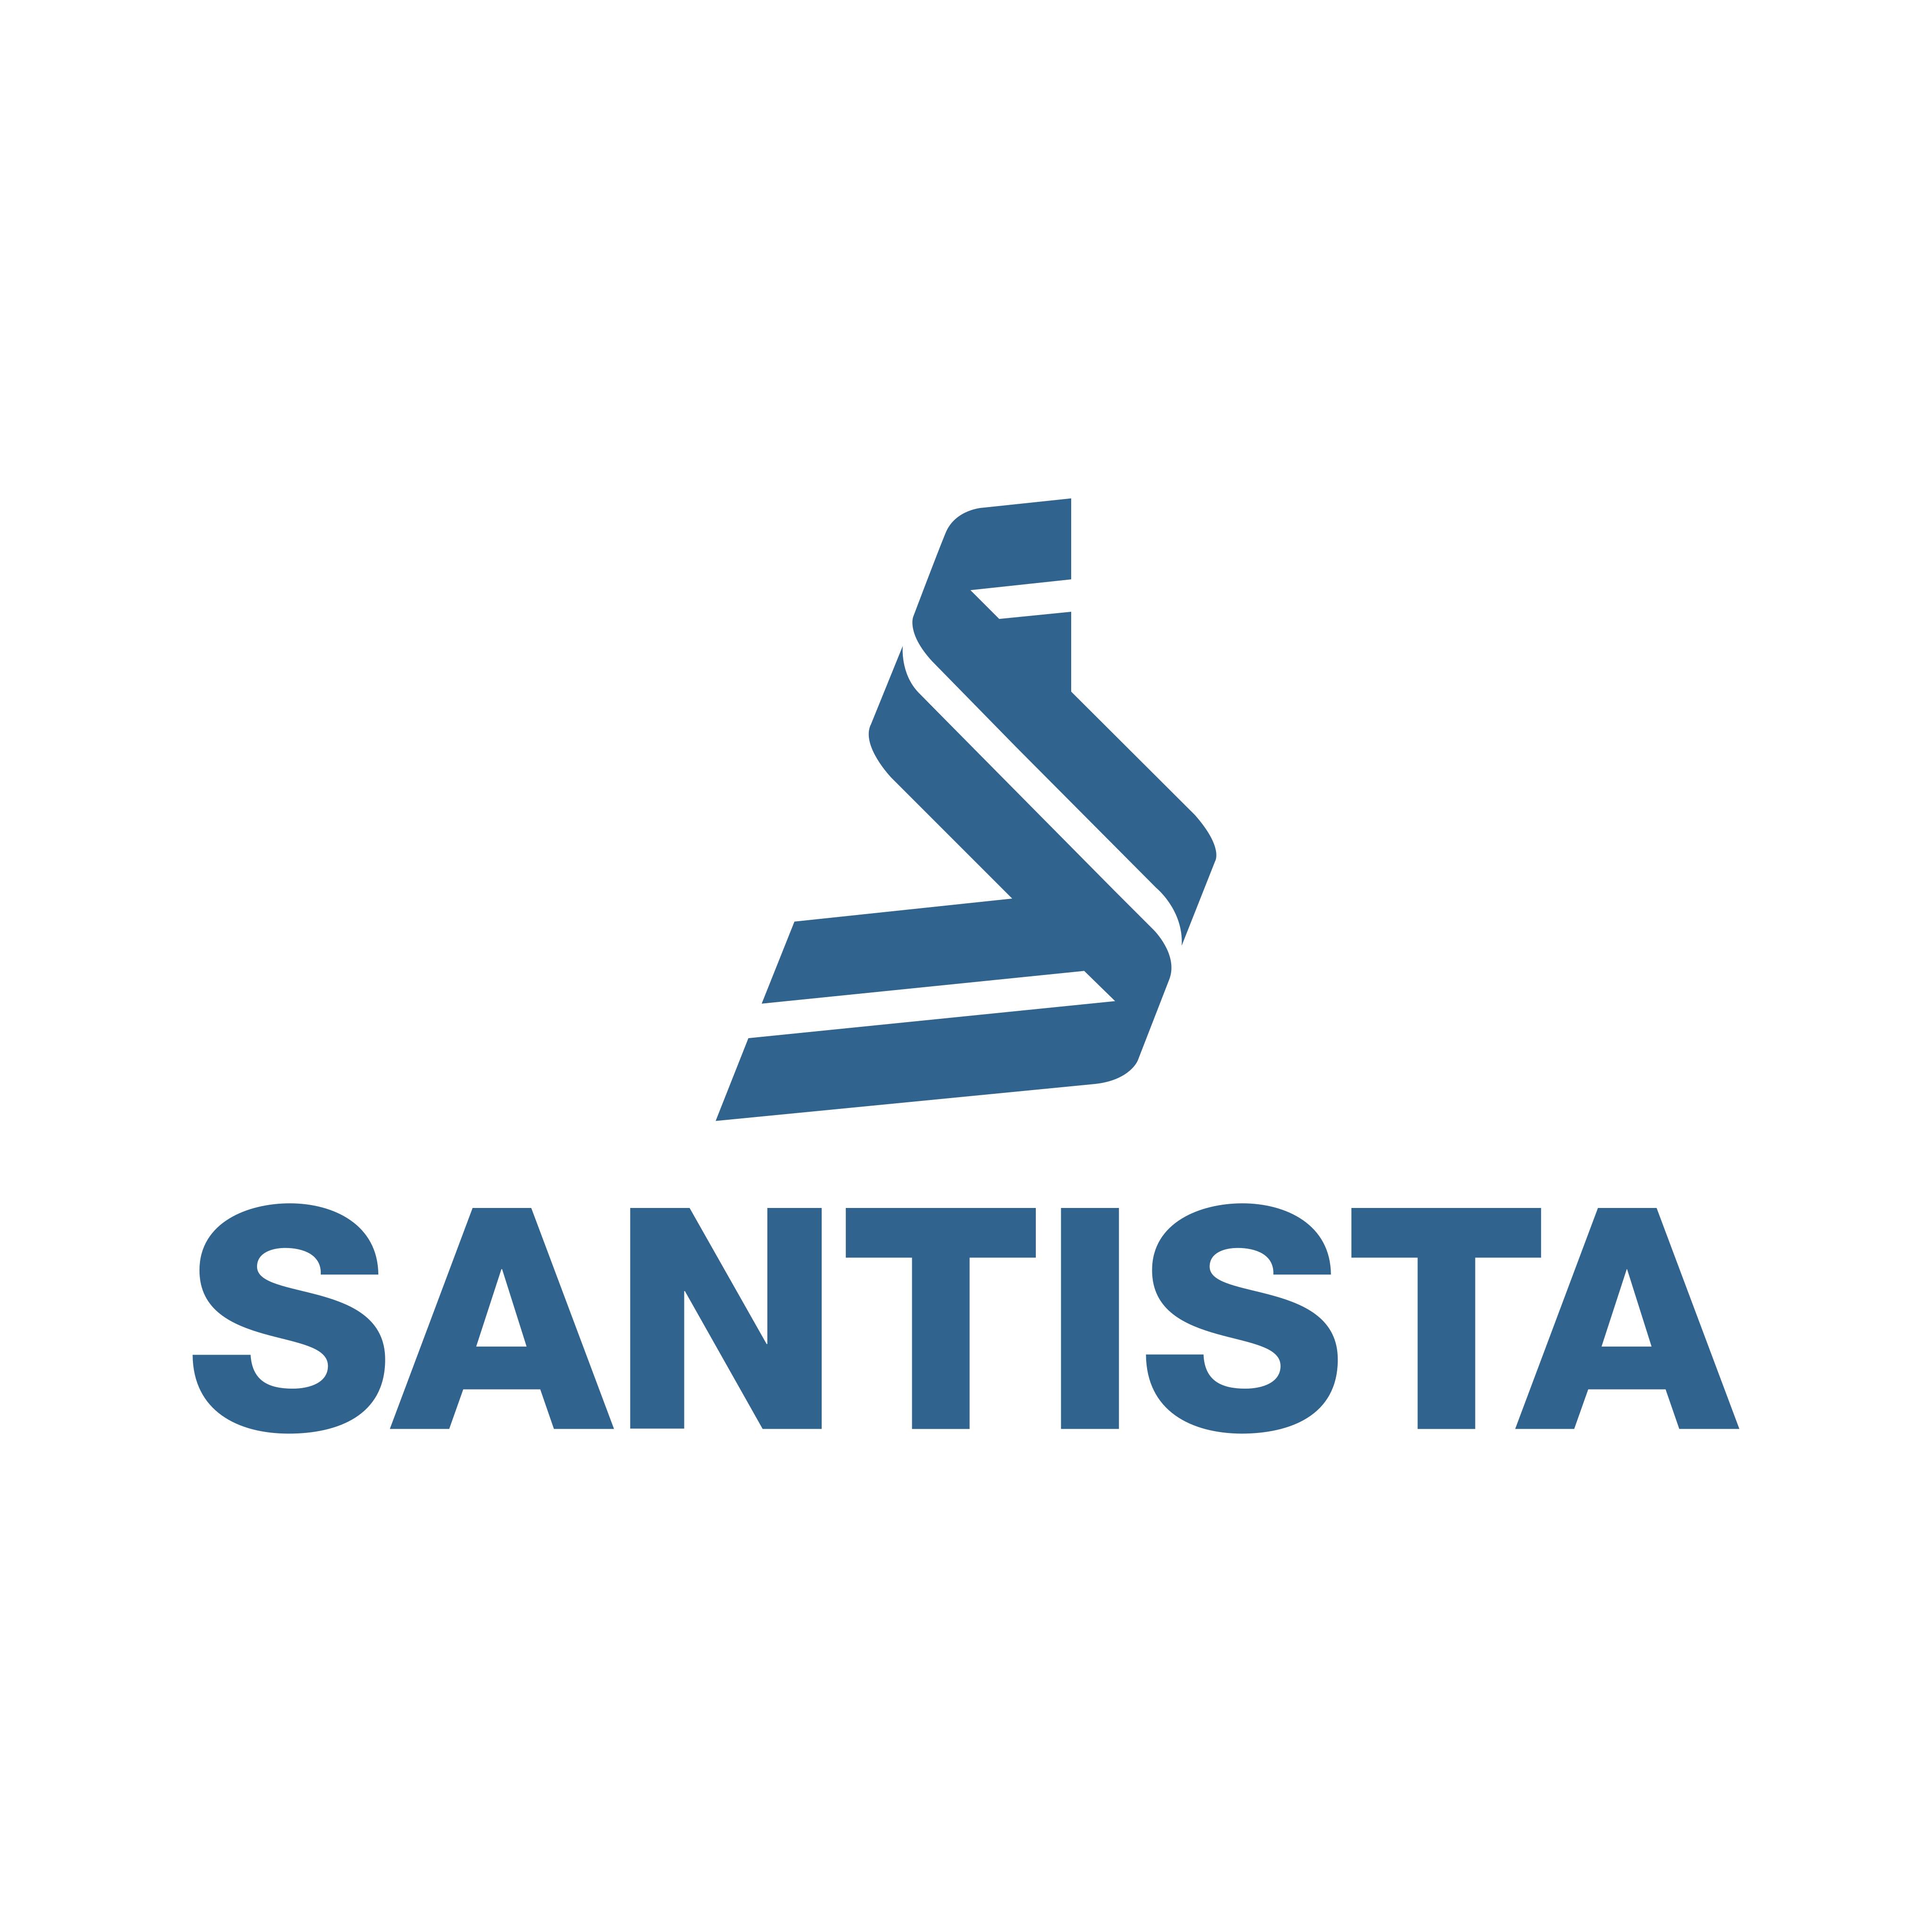 Santista Logo PNG.